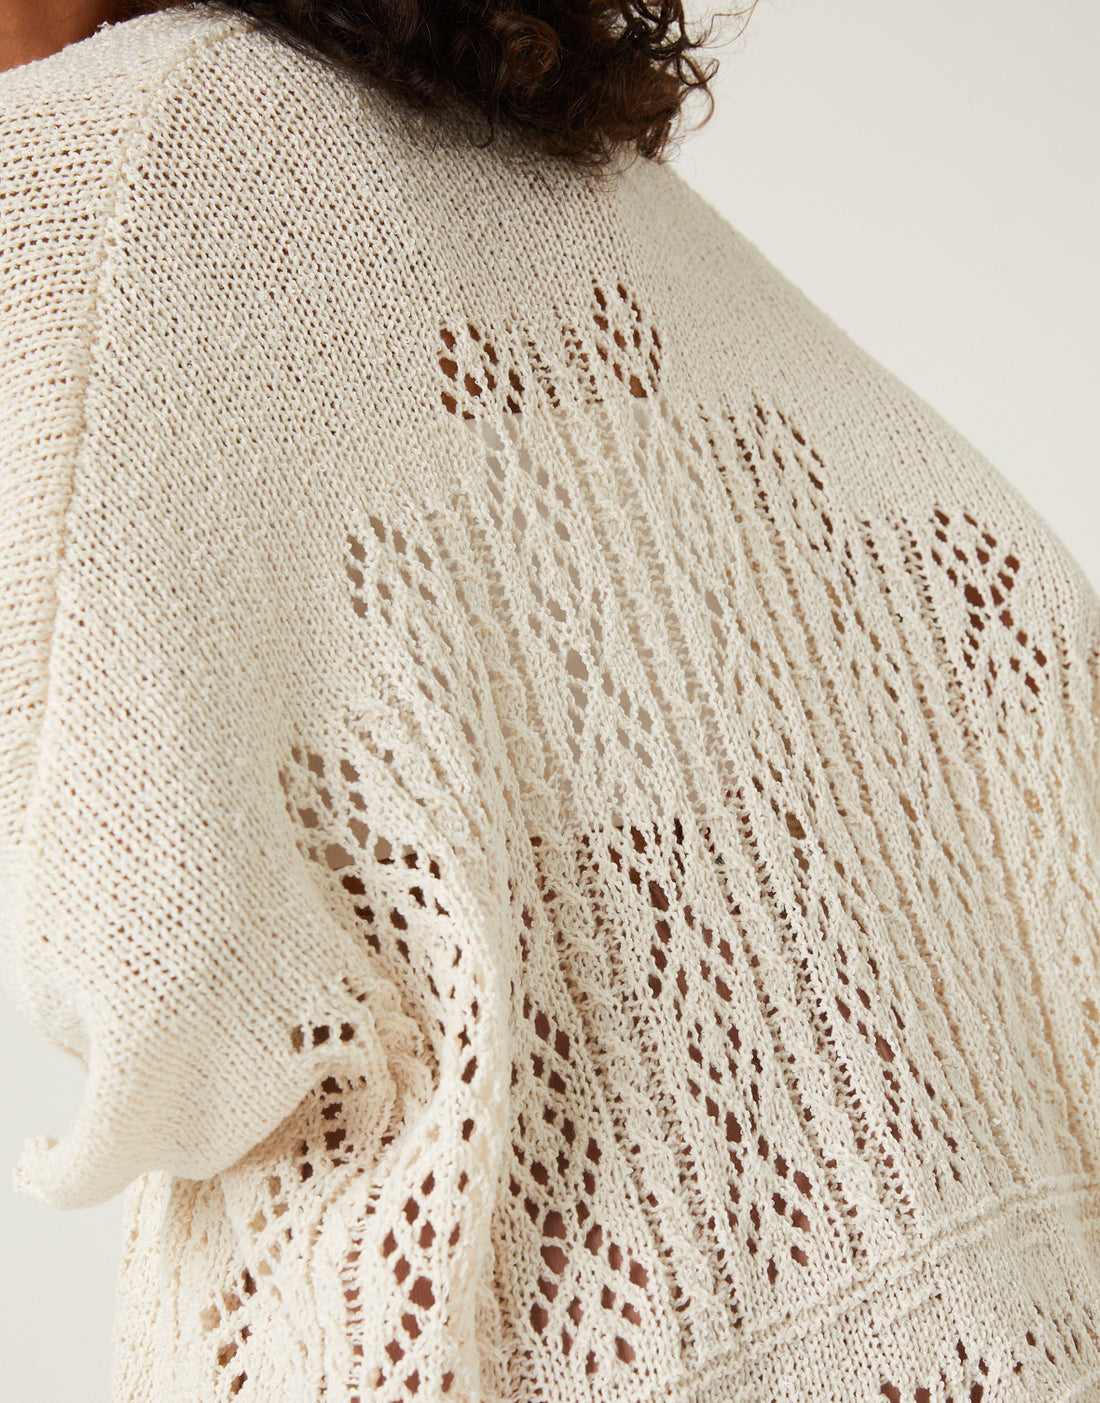 Crochet Short Sleeve Cardigan Outerwear -2020AVE